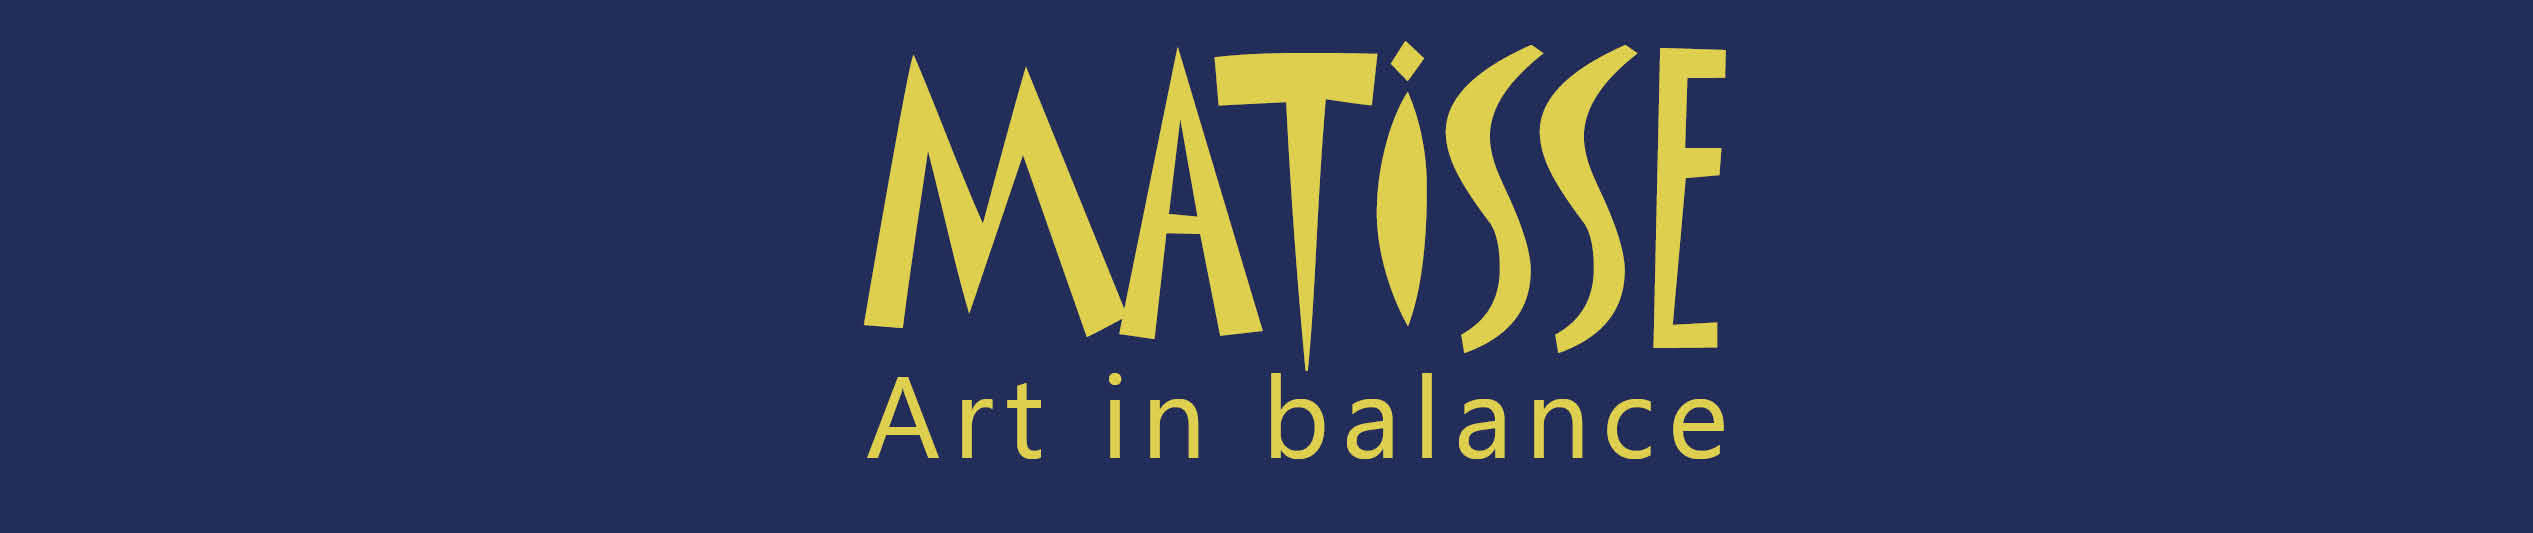 Matisse. Art in balance